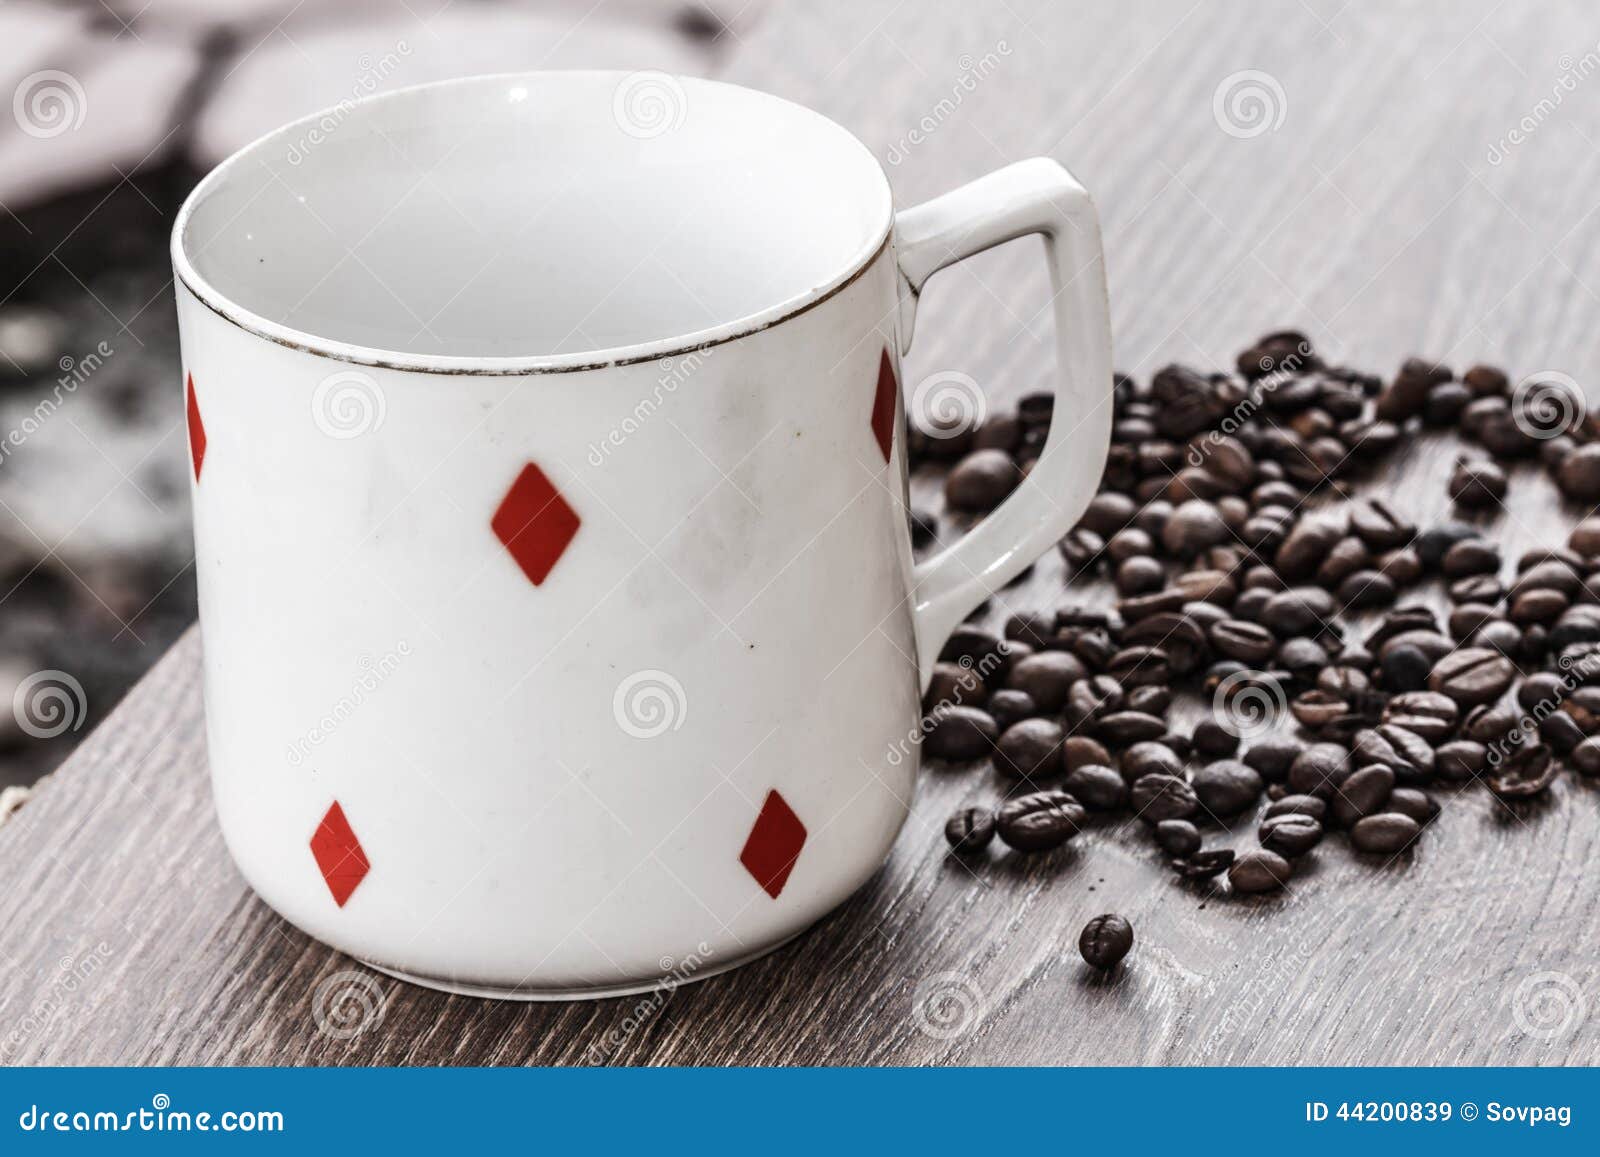 Coffee cup stock image. Image of golden, abundance, life - 44200839